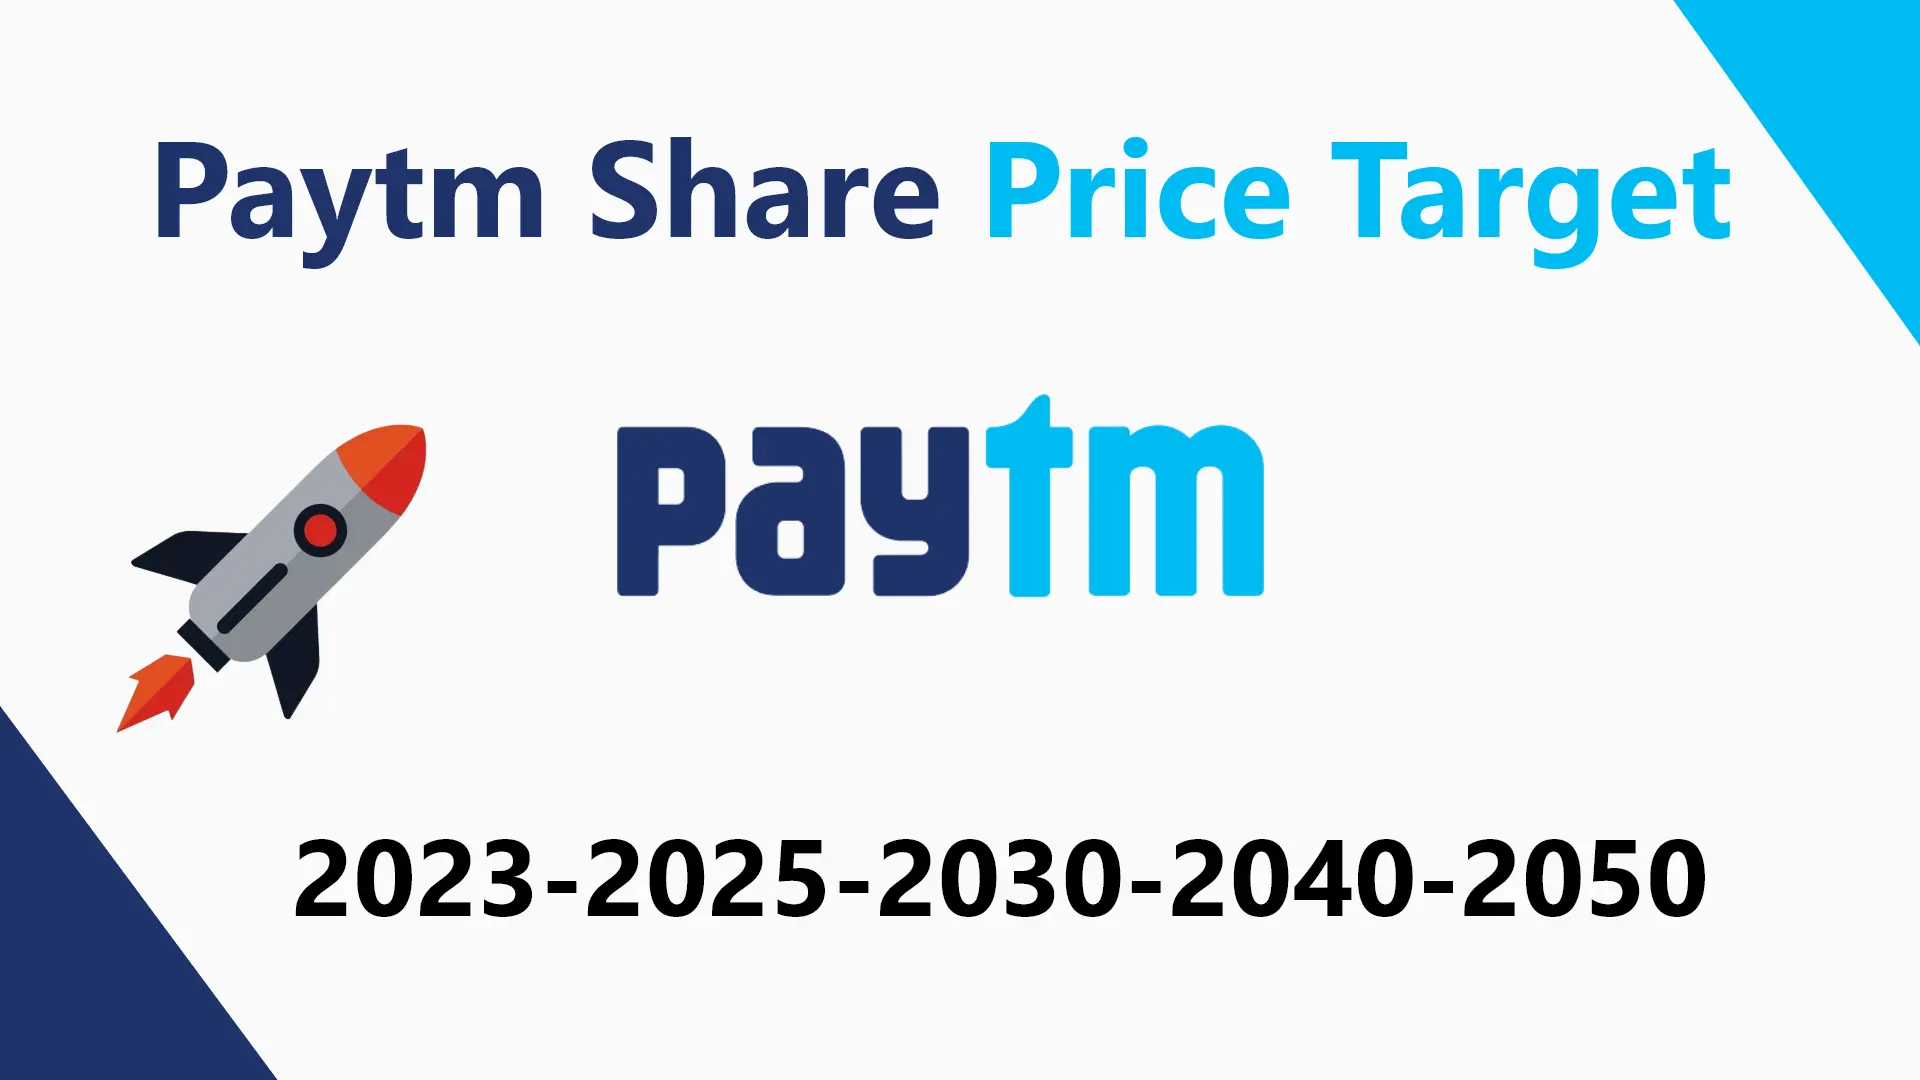 Paytm Share Price Target 2023 2025 2030 2040 2050 8068